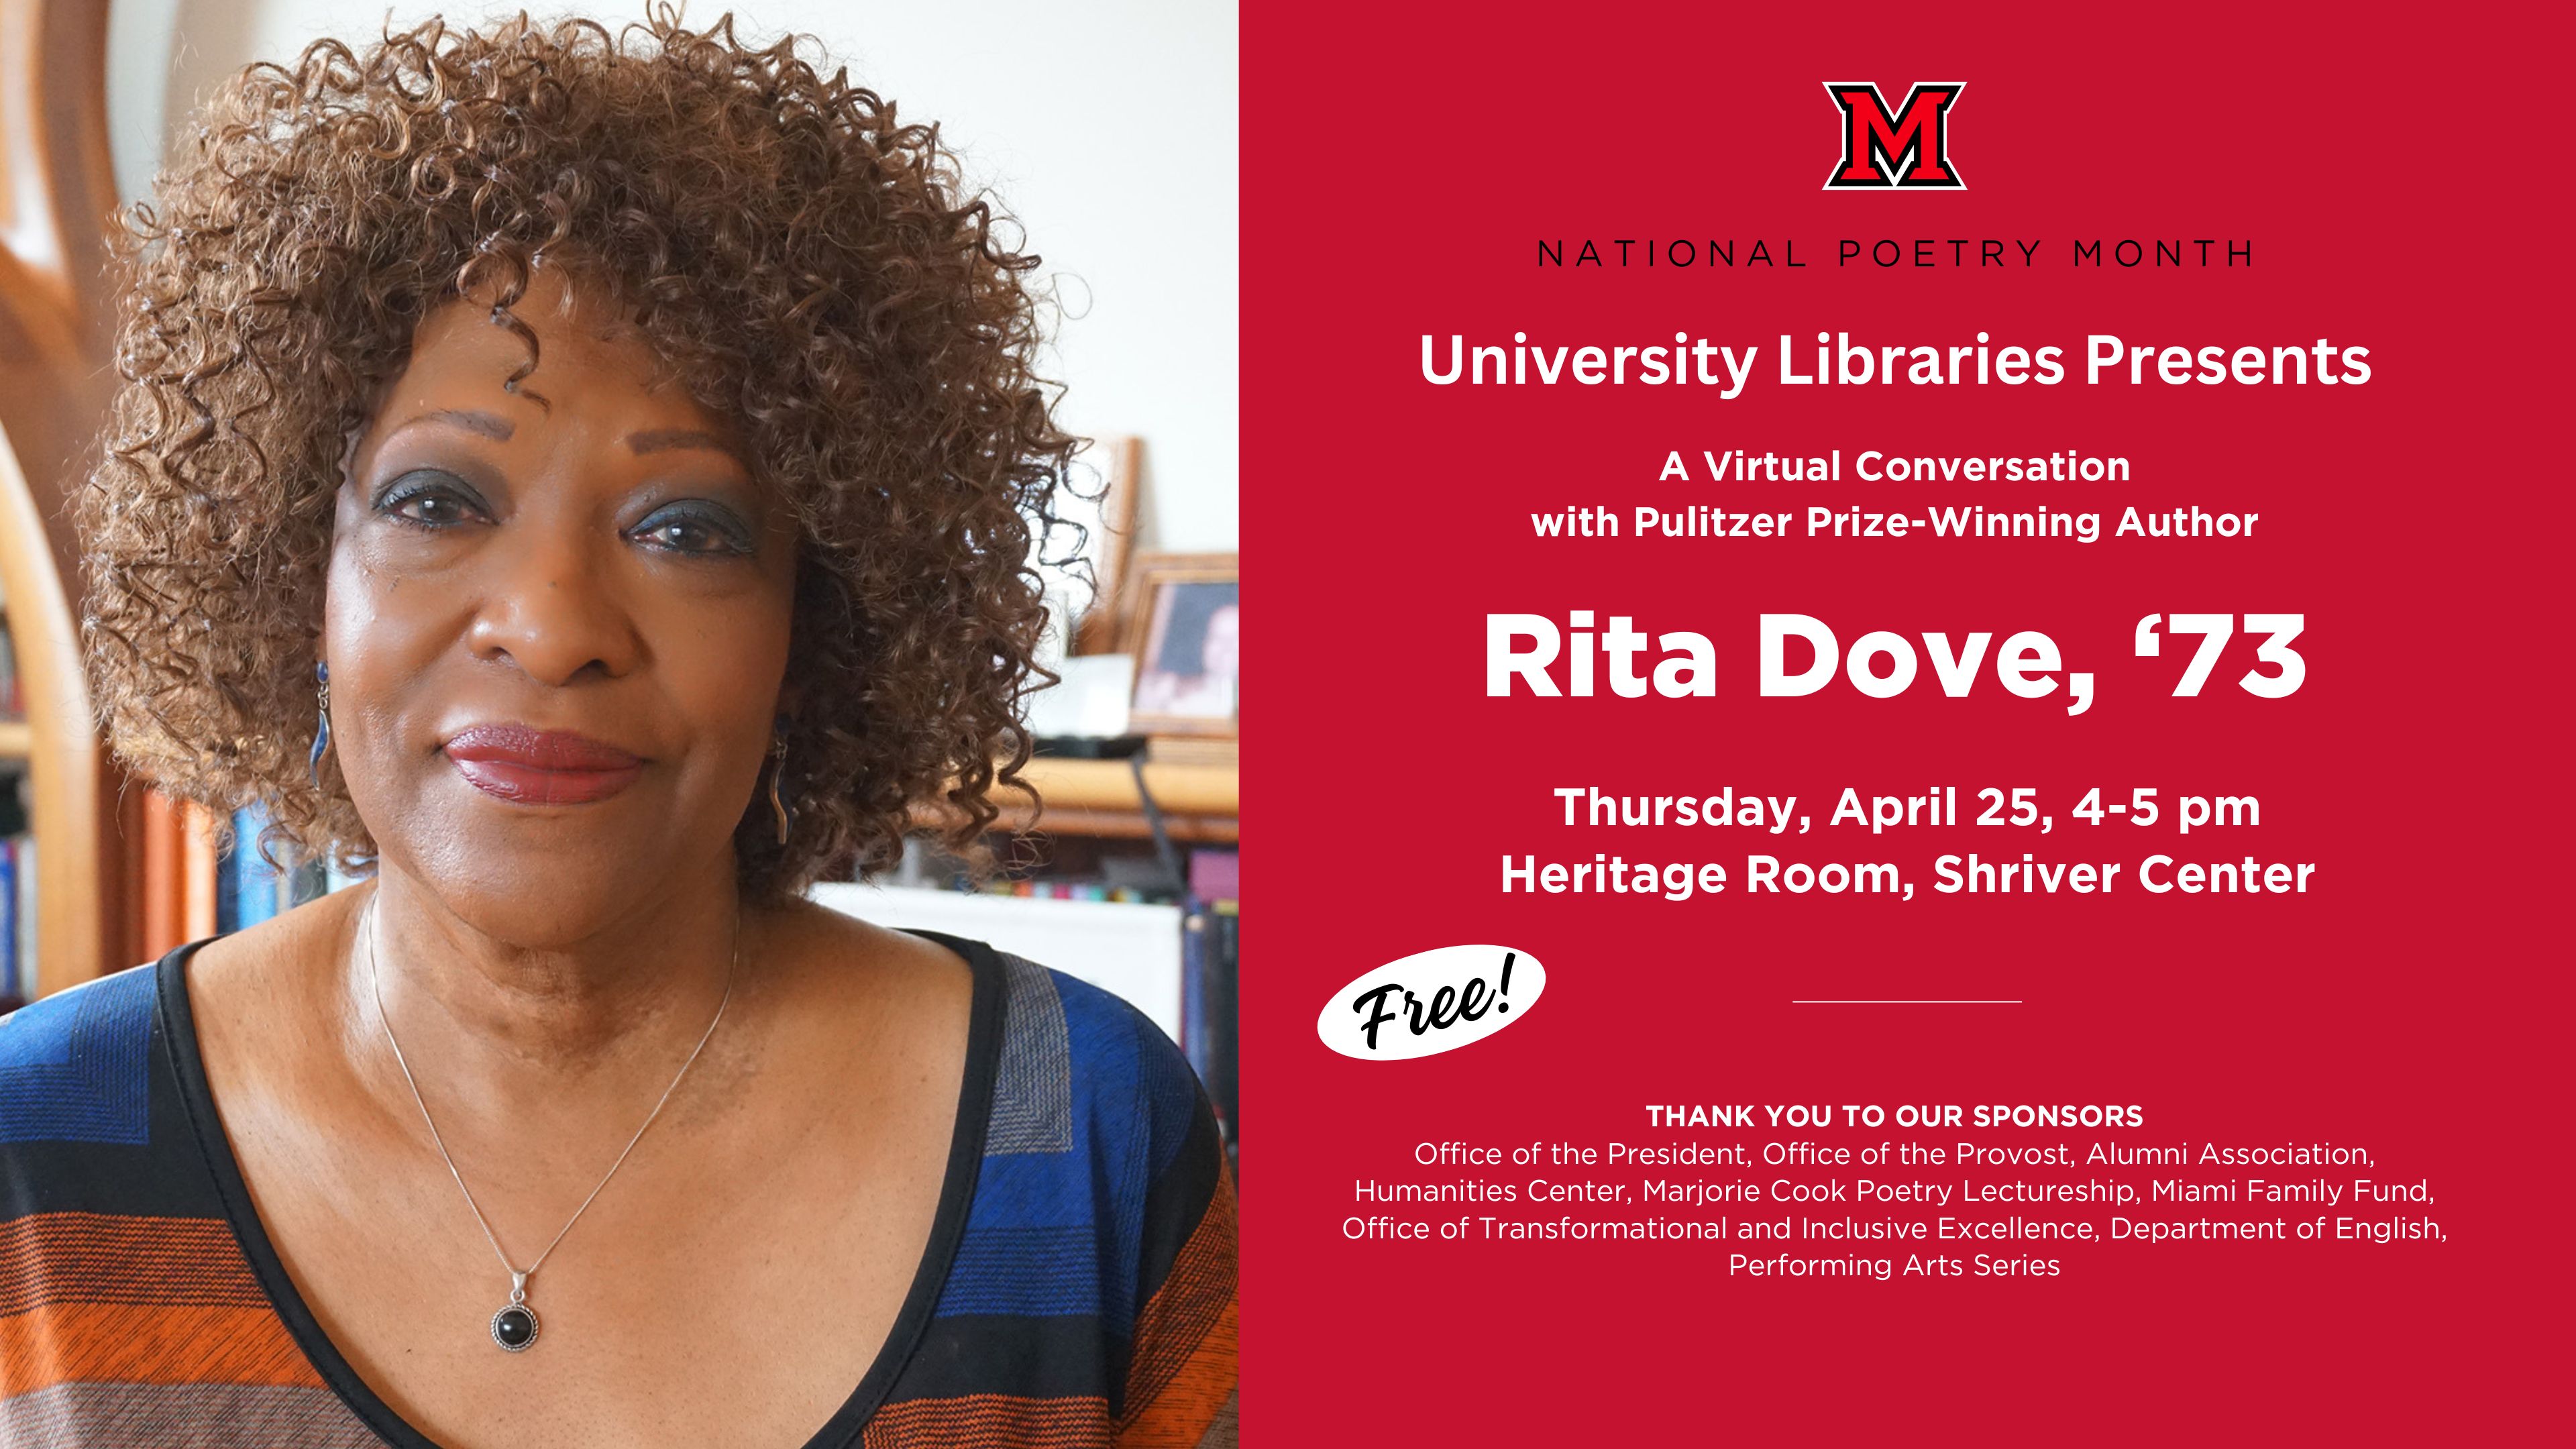 University Libraries present Rita Dove on Thursday, April 25 4-5 p.m. in the Heritage Room, Shriver Center, 